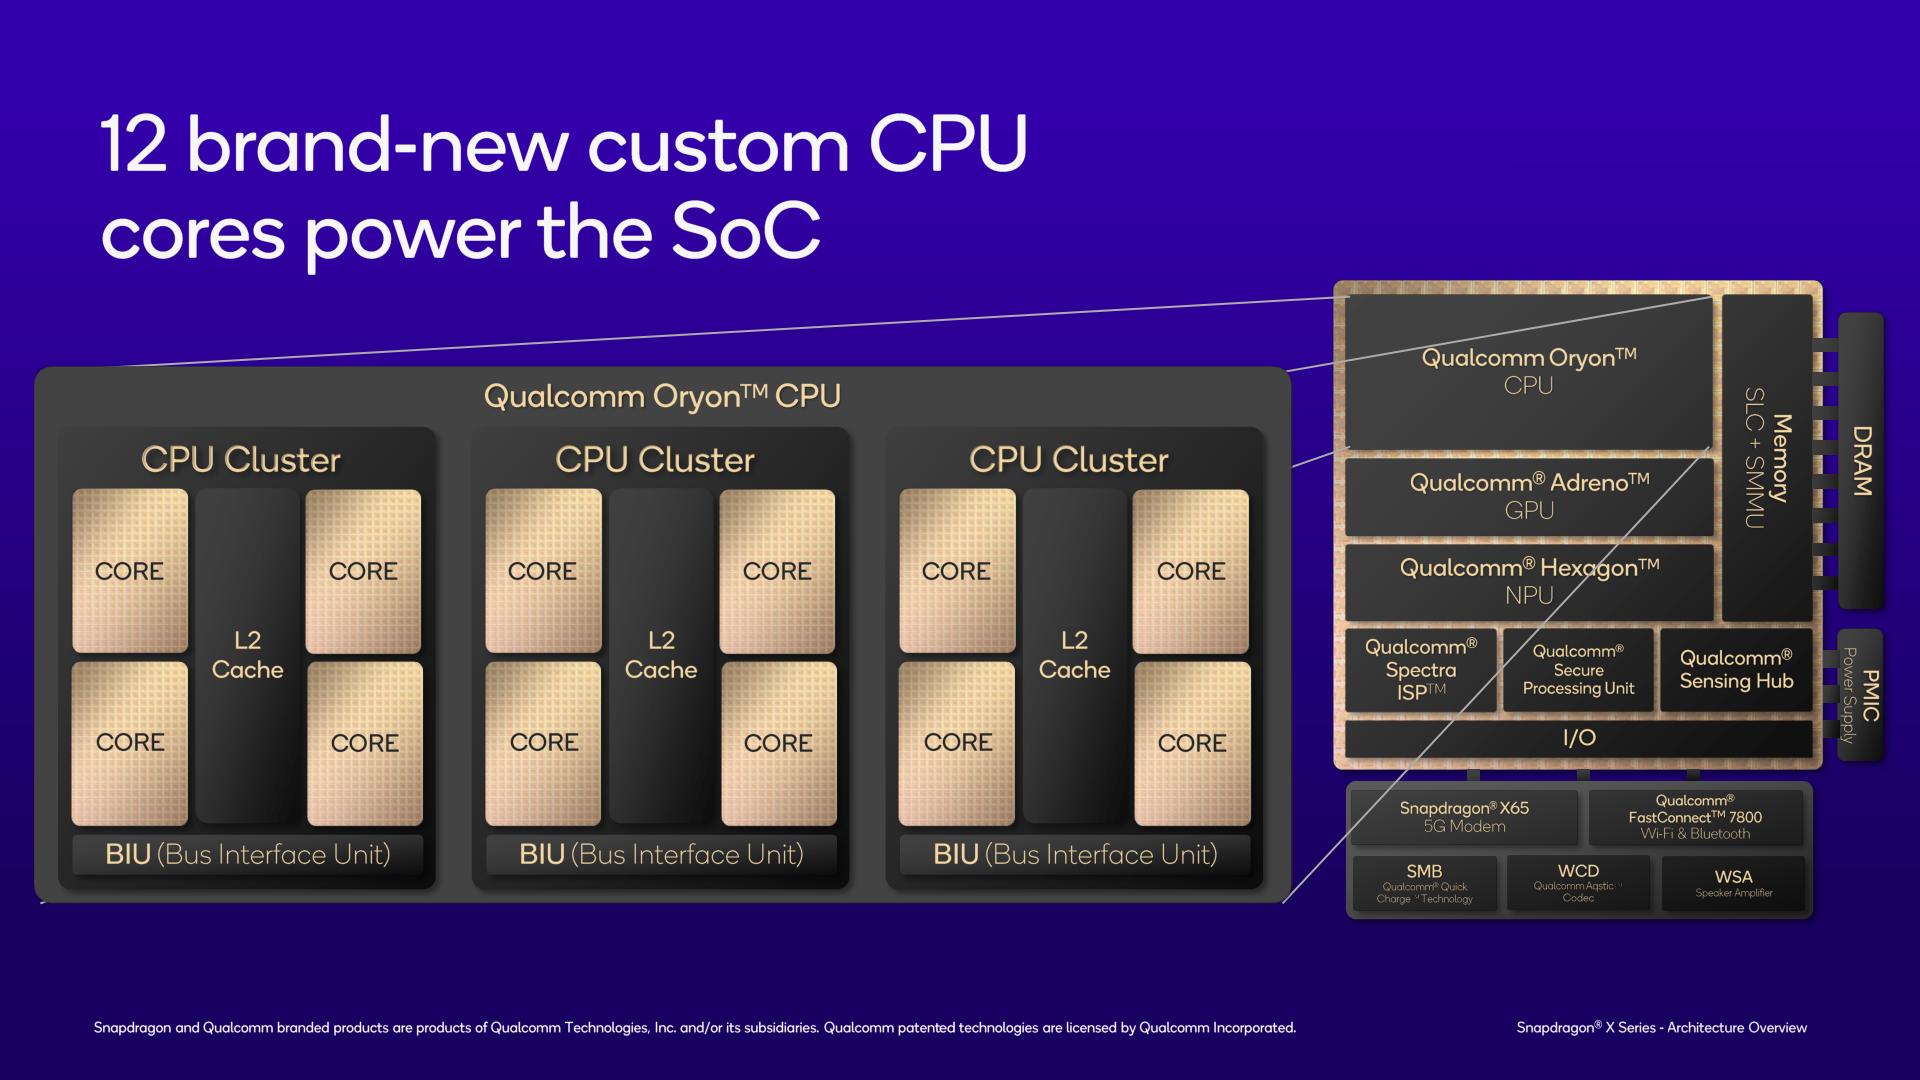 Qualcomm Oryon CPU core